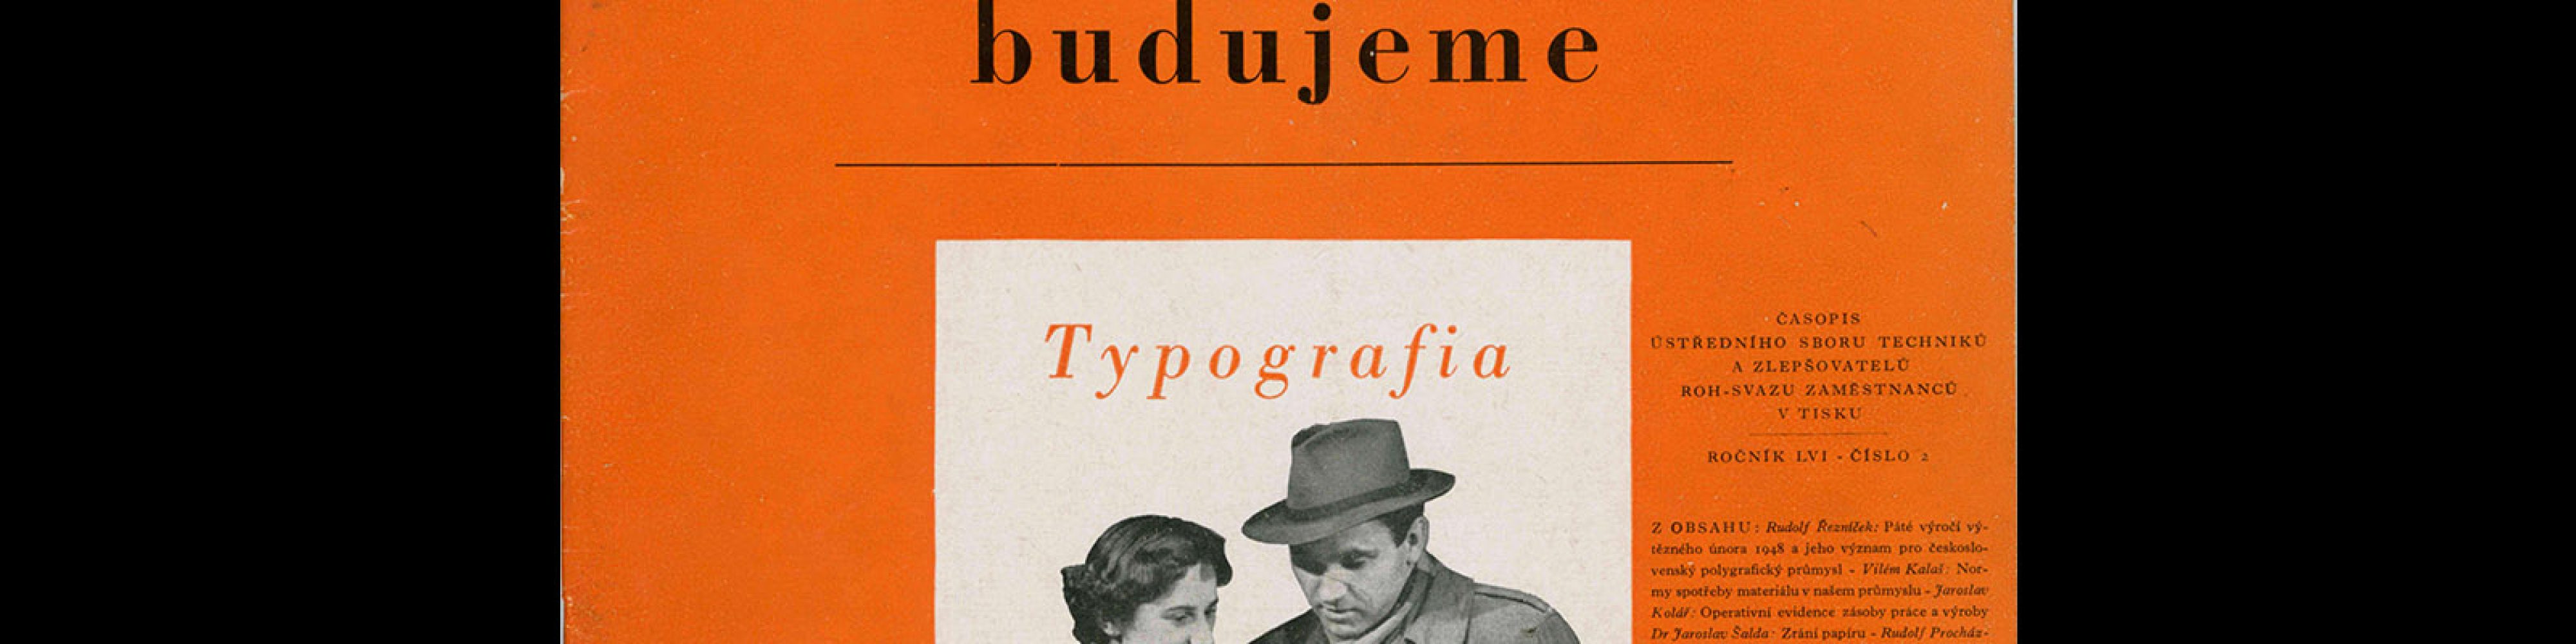 Typografia, ročník 56, 02, 1953. Cover design by Oldřich Hlavsa